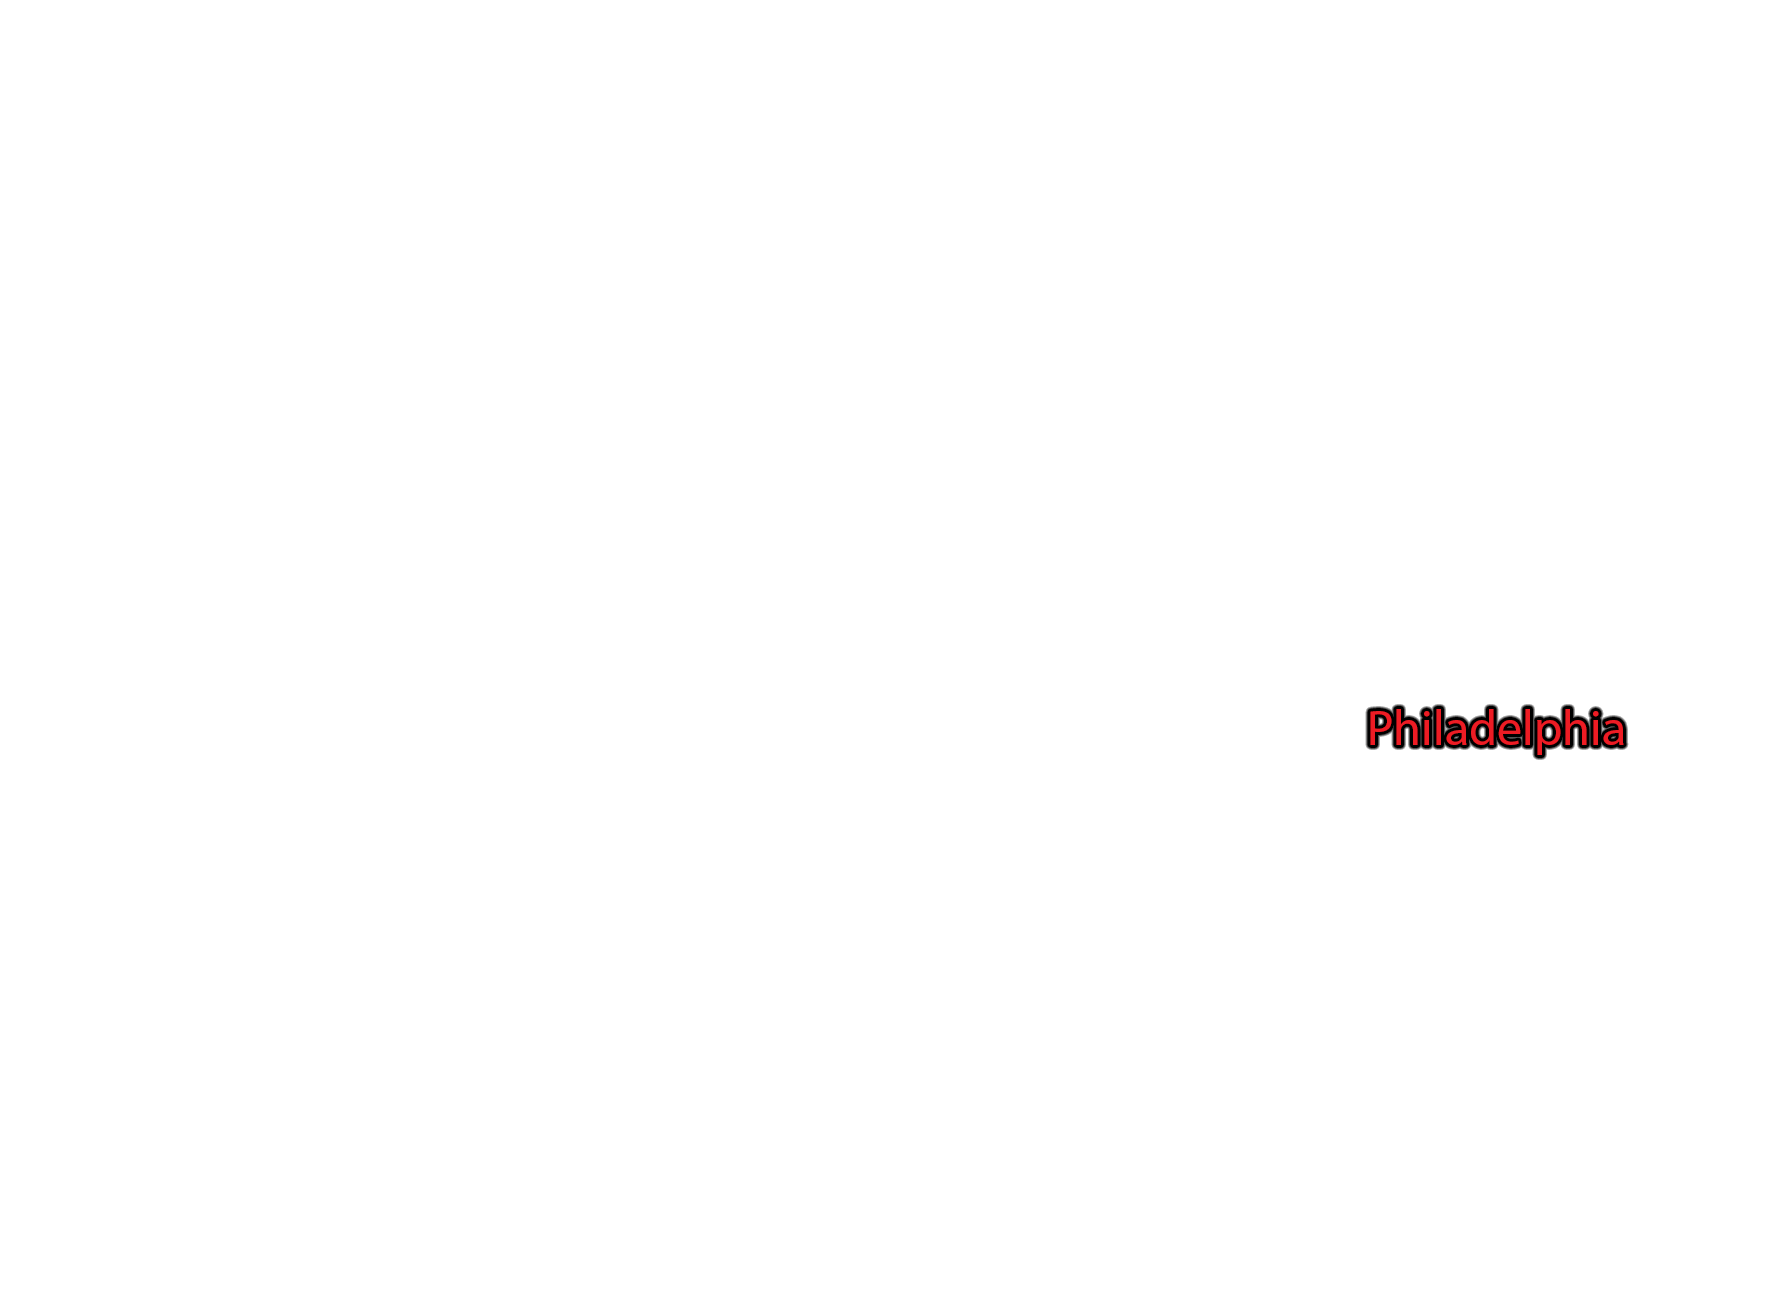 Philadelphia label with glow